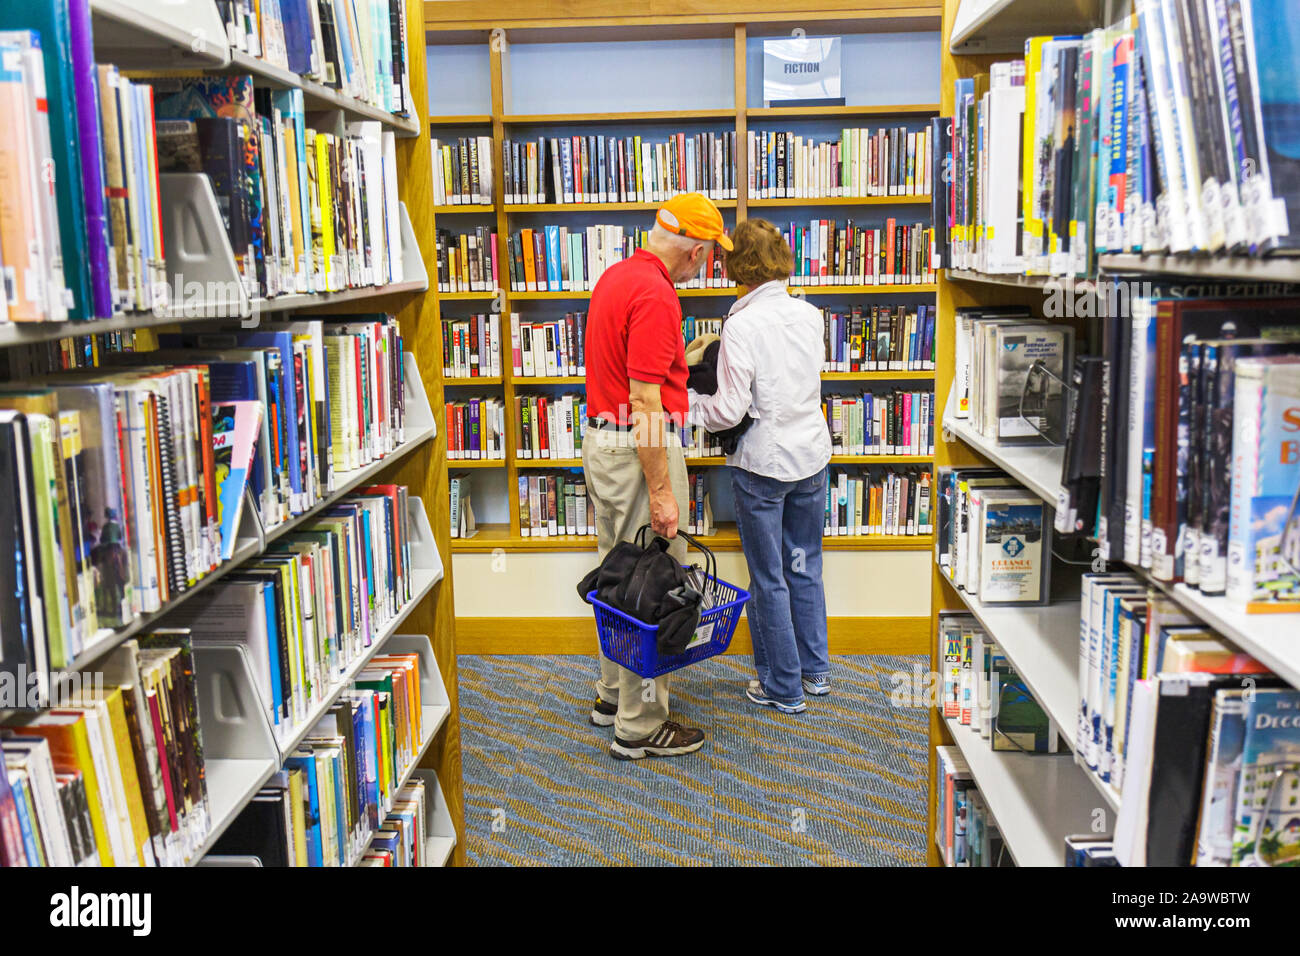 Miami Beach Florida,22nd Street,Public Library,man men male,woman female women,book,books,shelf shelves,FL100123053 Stock Photo